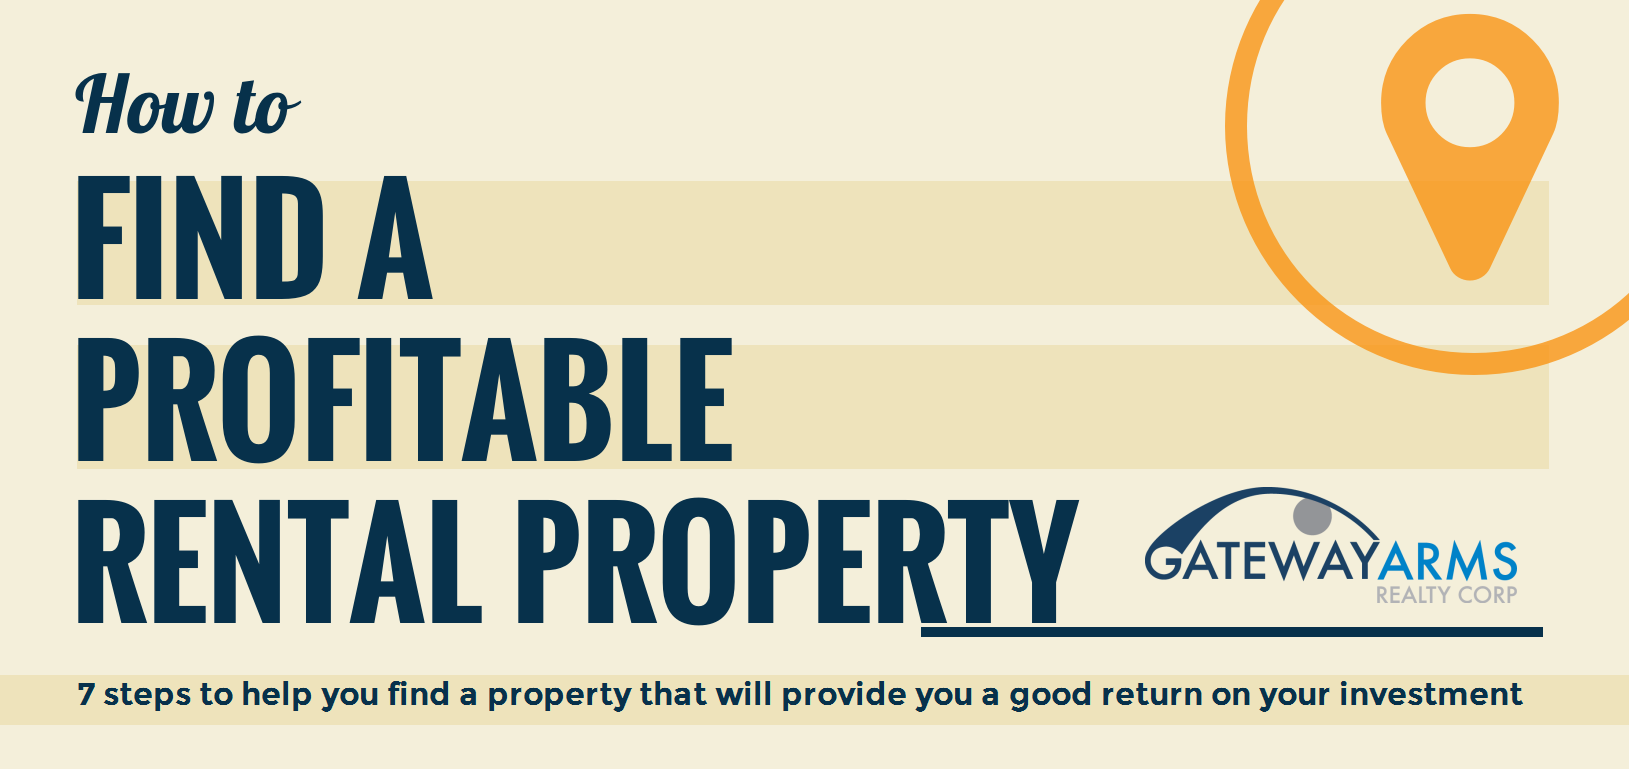 Profitable Rental Property